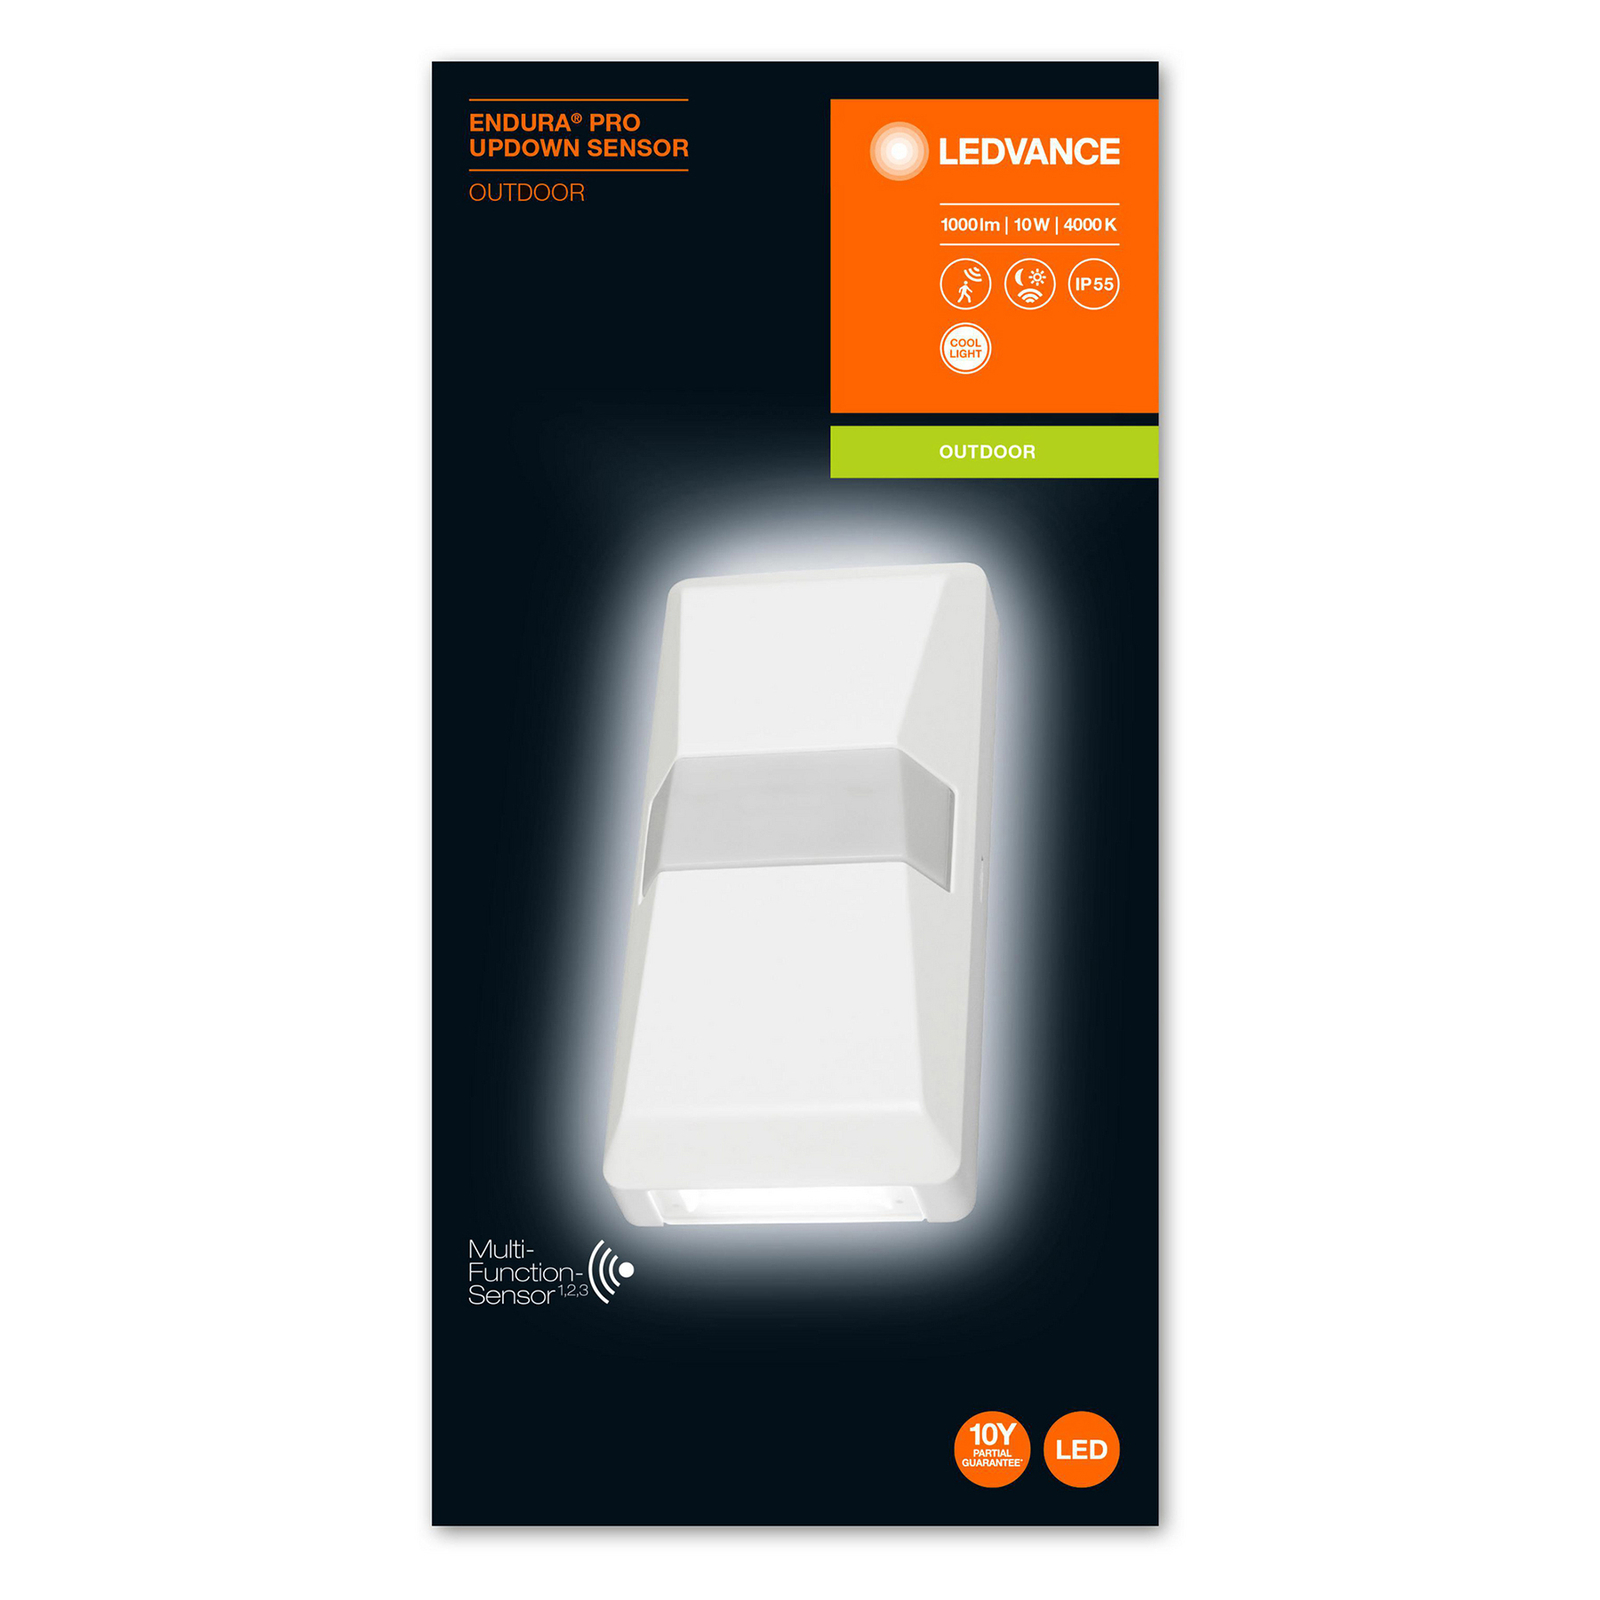 LEDVANCE Endura Pro UpDown sensore bianco